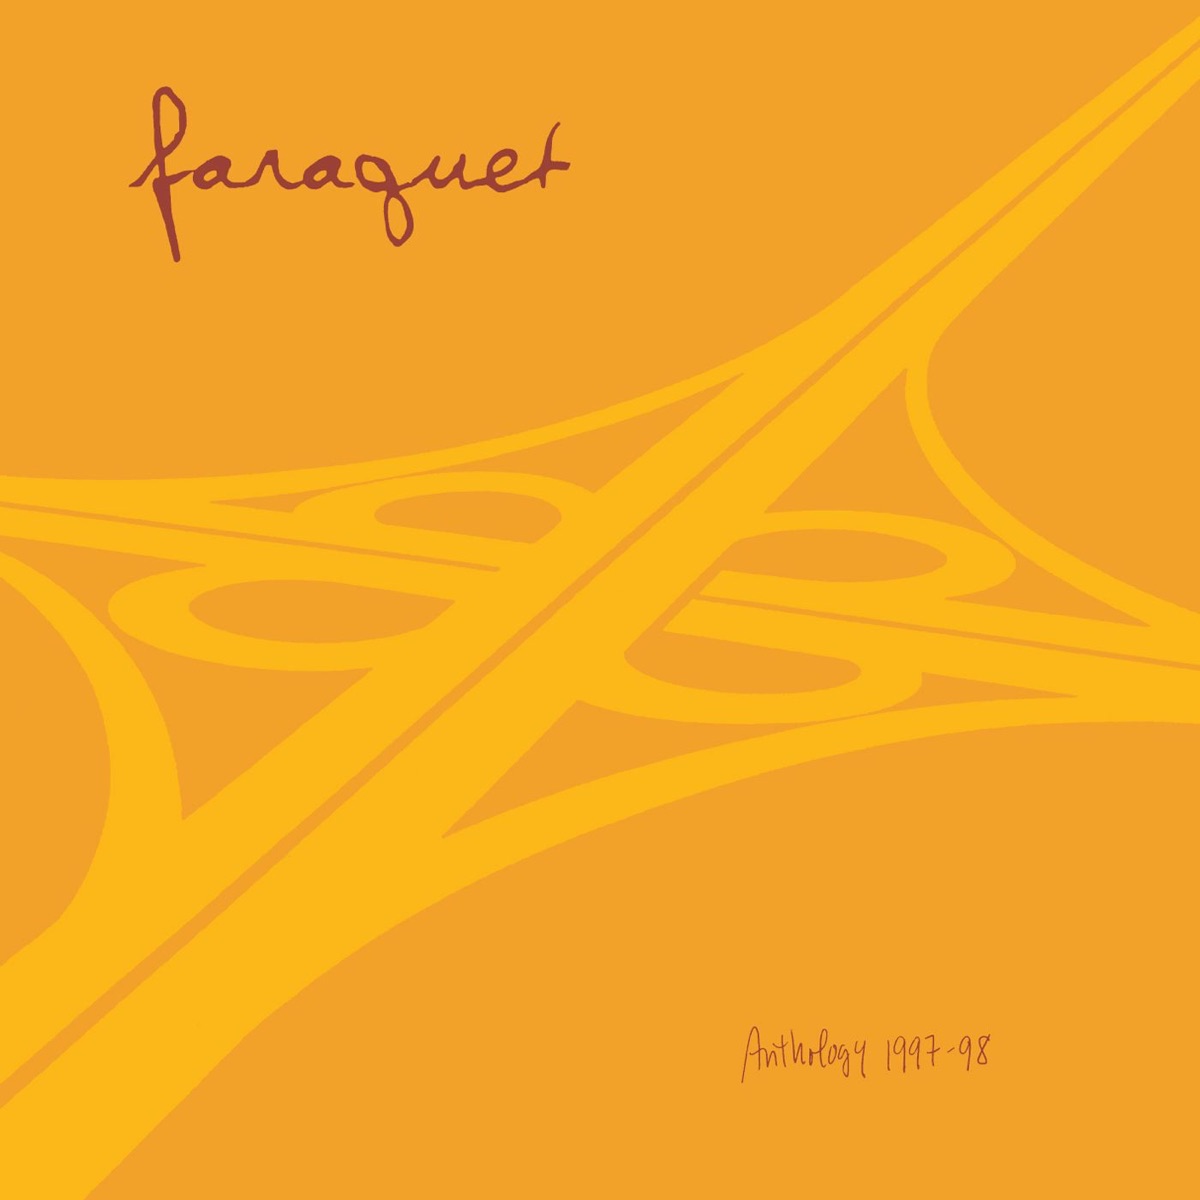 Anthology 1997-98 - Album by Faraquet - Apple Music